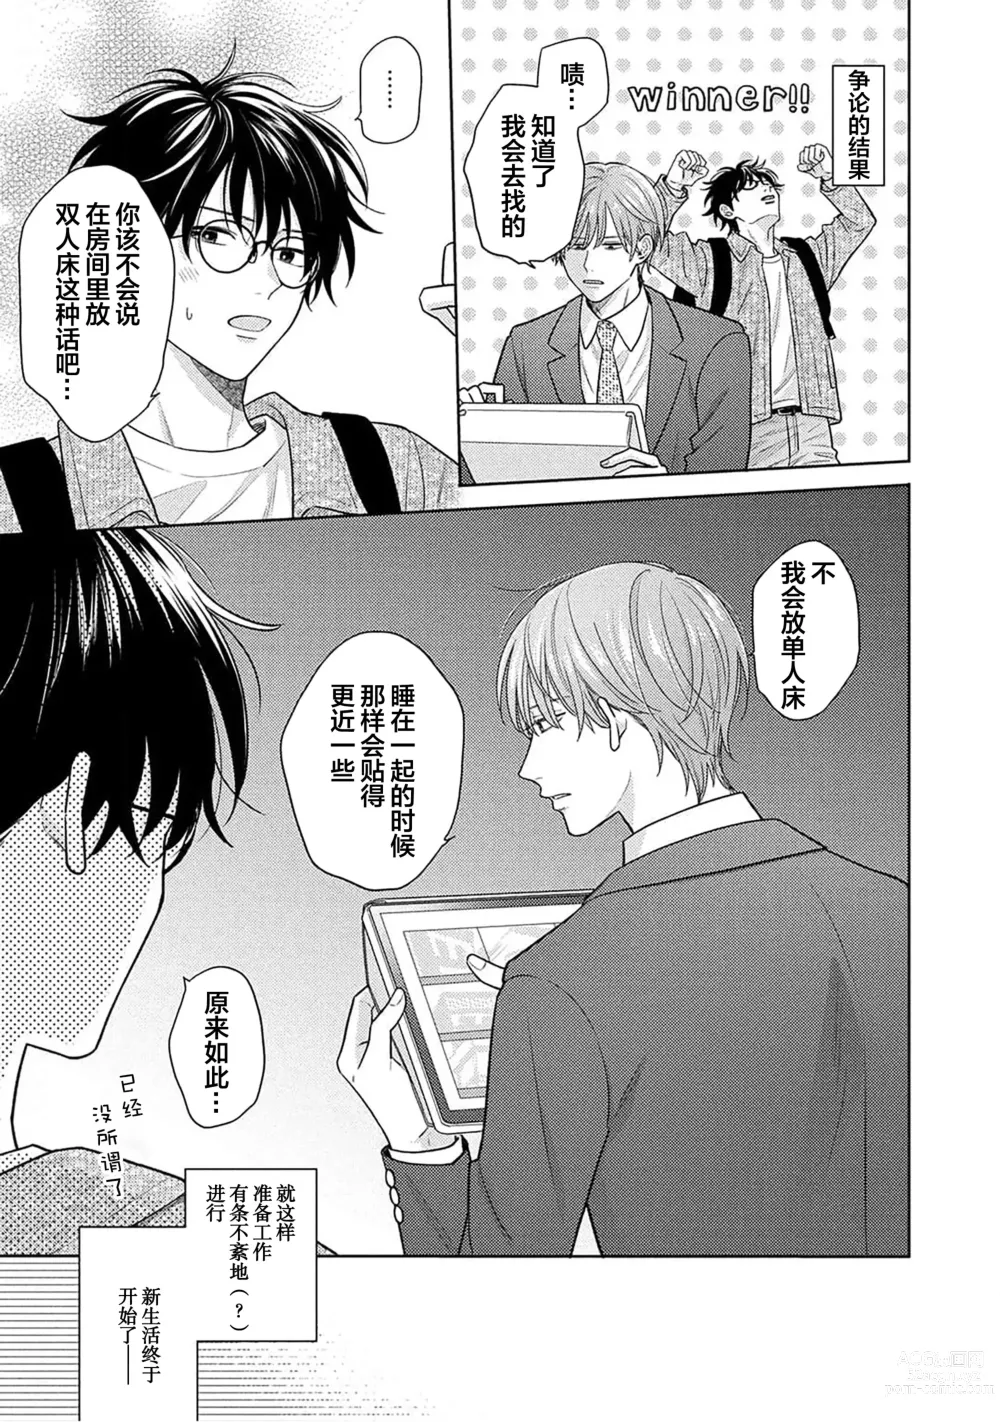 Page 196 of manga 这真的是恋爱吗?